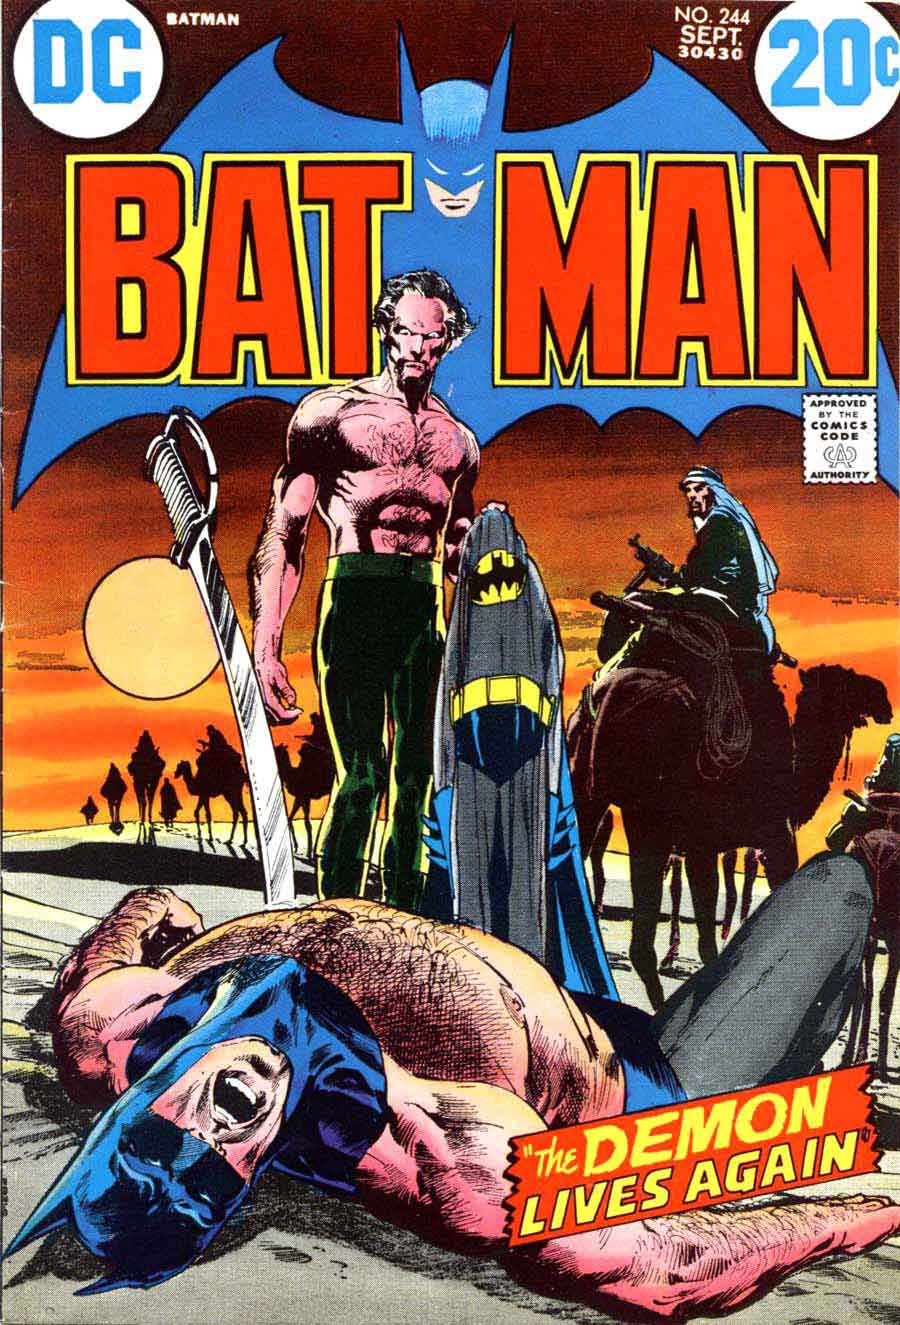 Batman #244 bronze age 1970s dc ras al ghul comic book cover art by Neal Adams